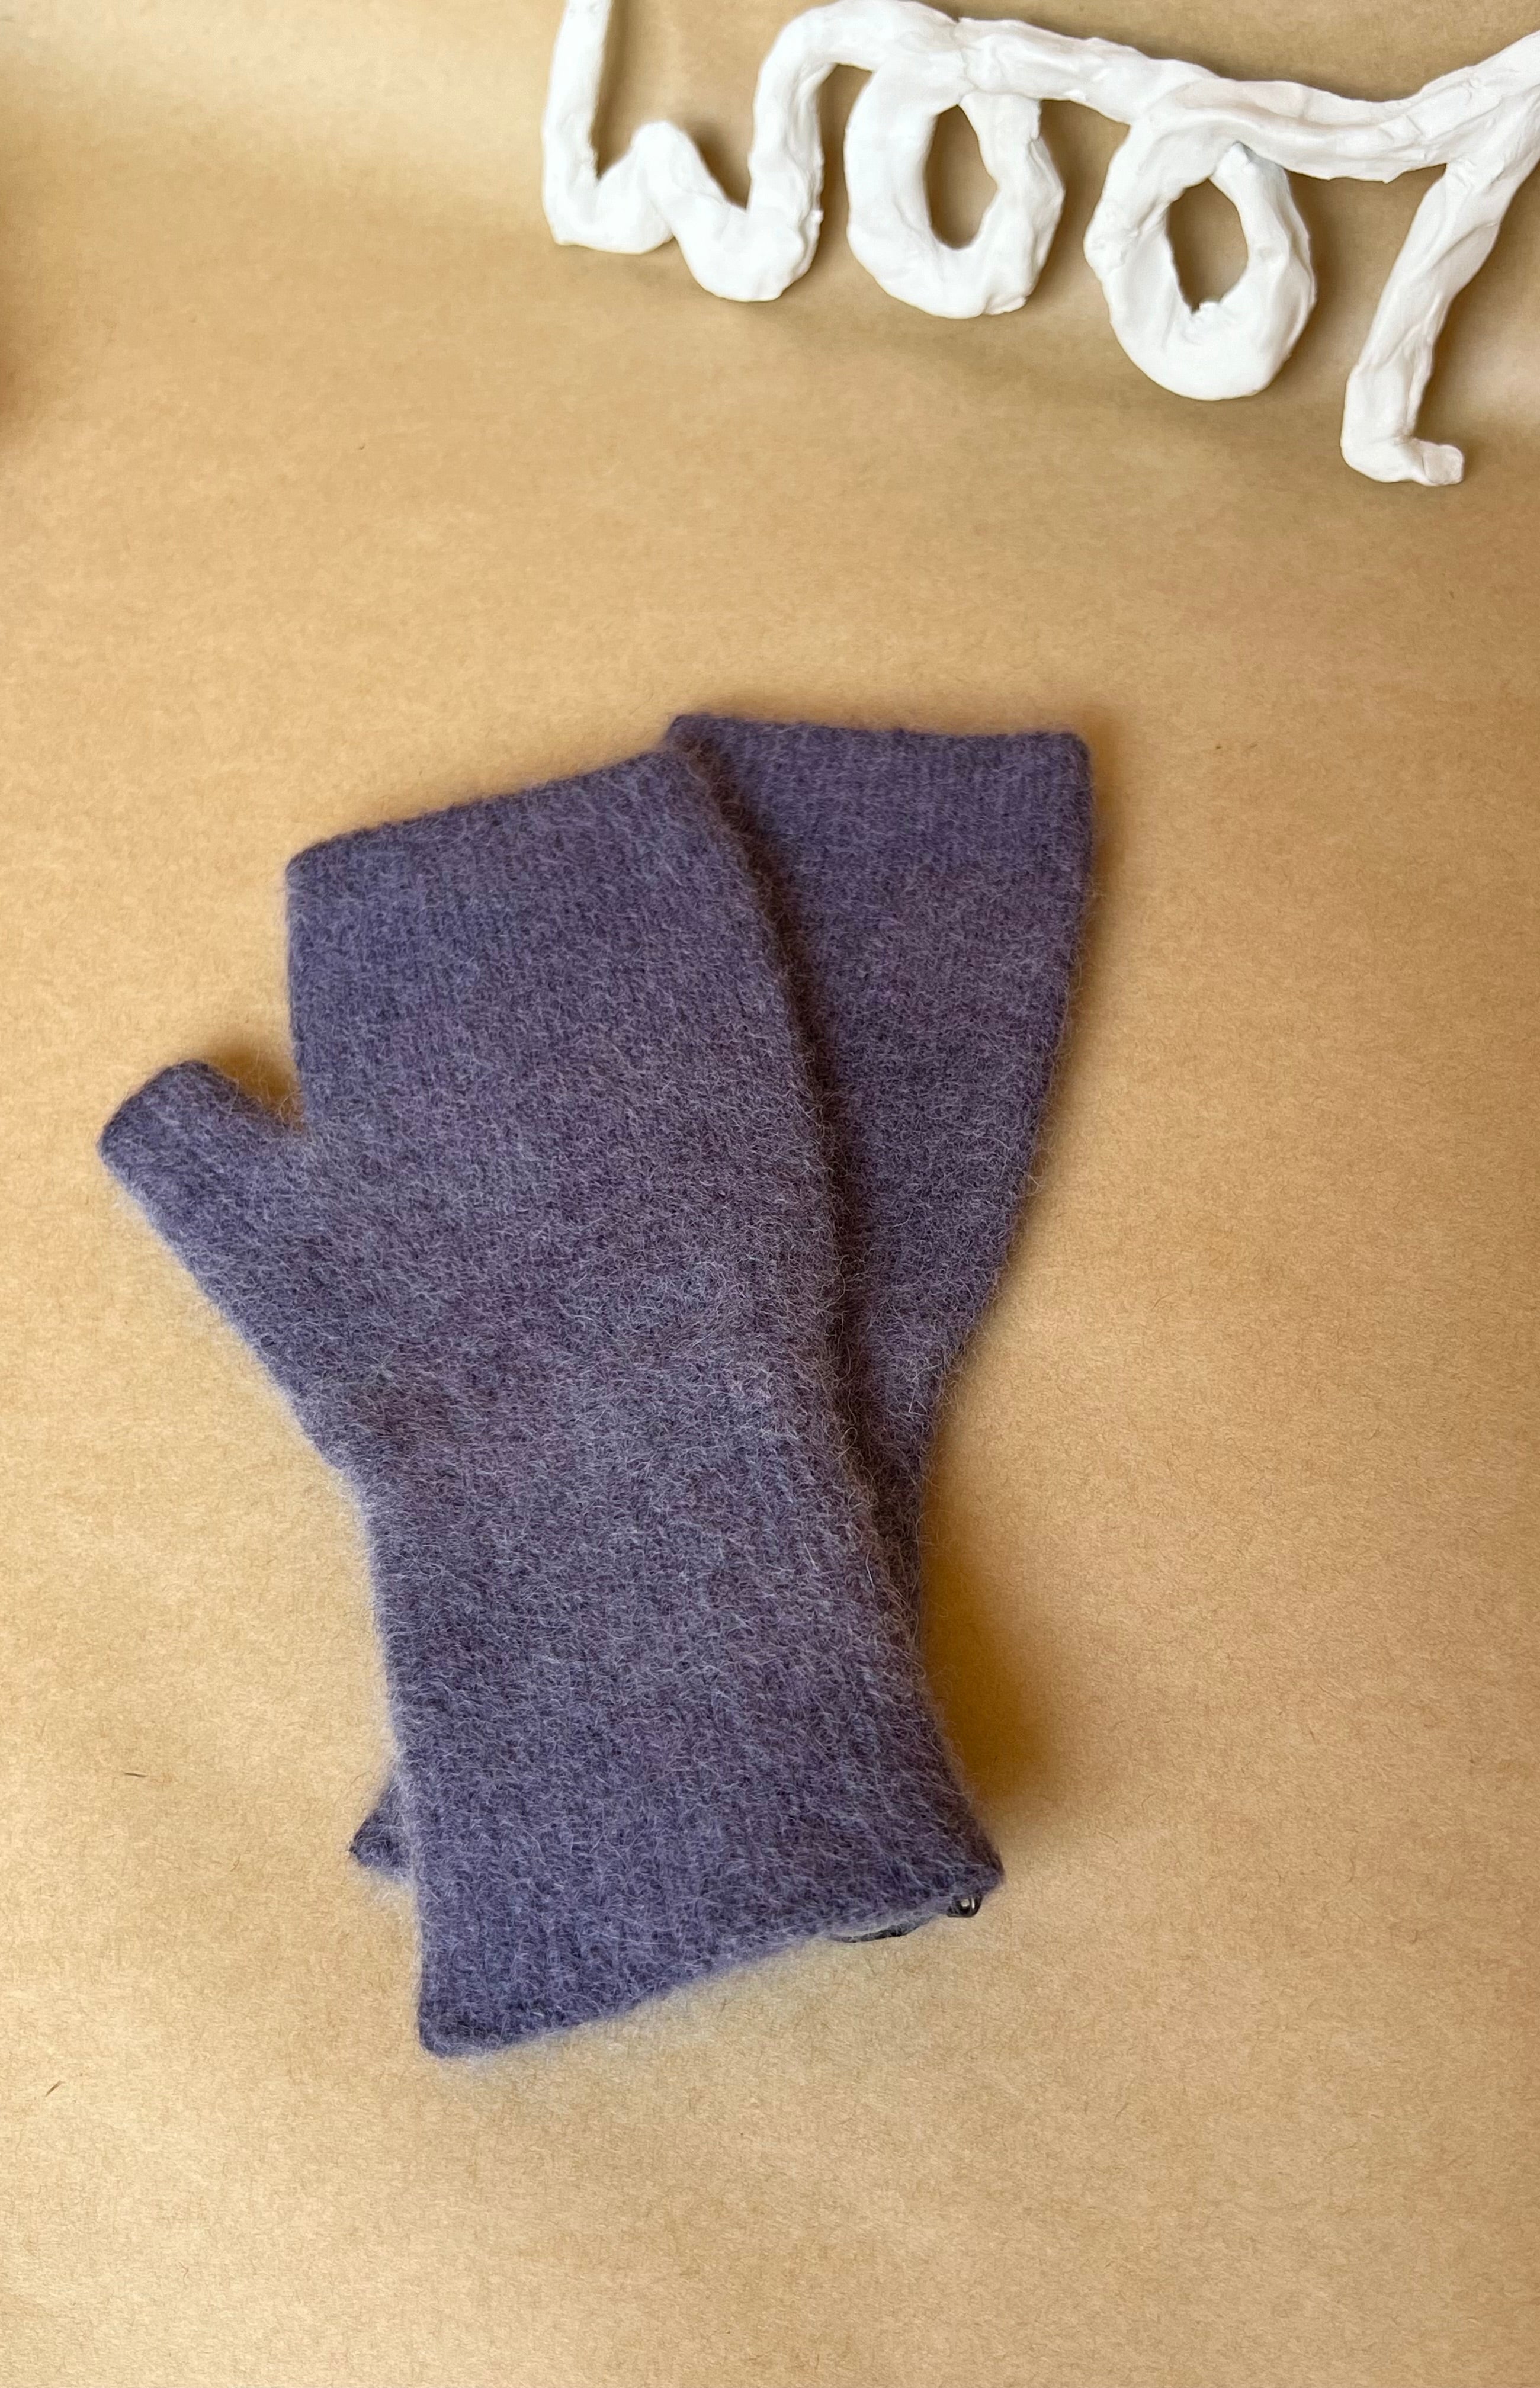 Angora/Lambswool Sloves: Medium Length Cuff